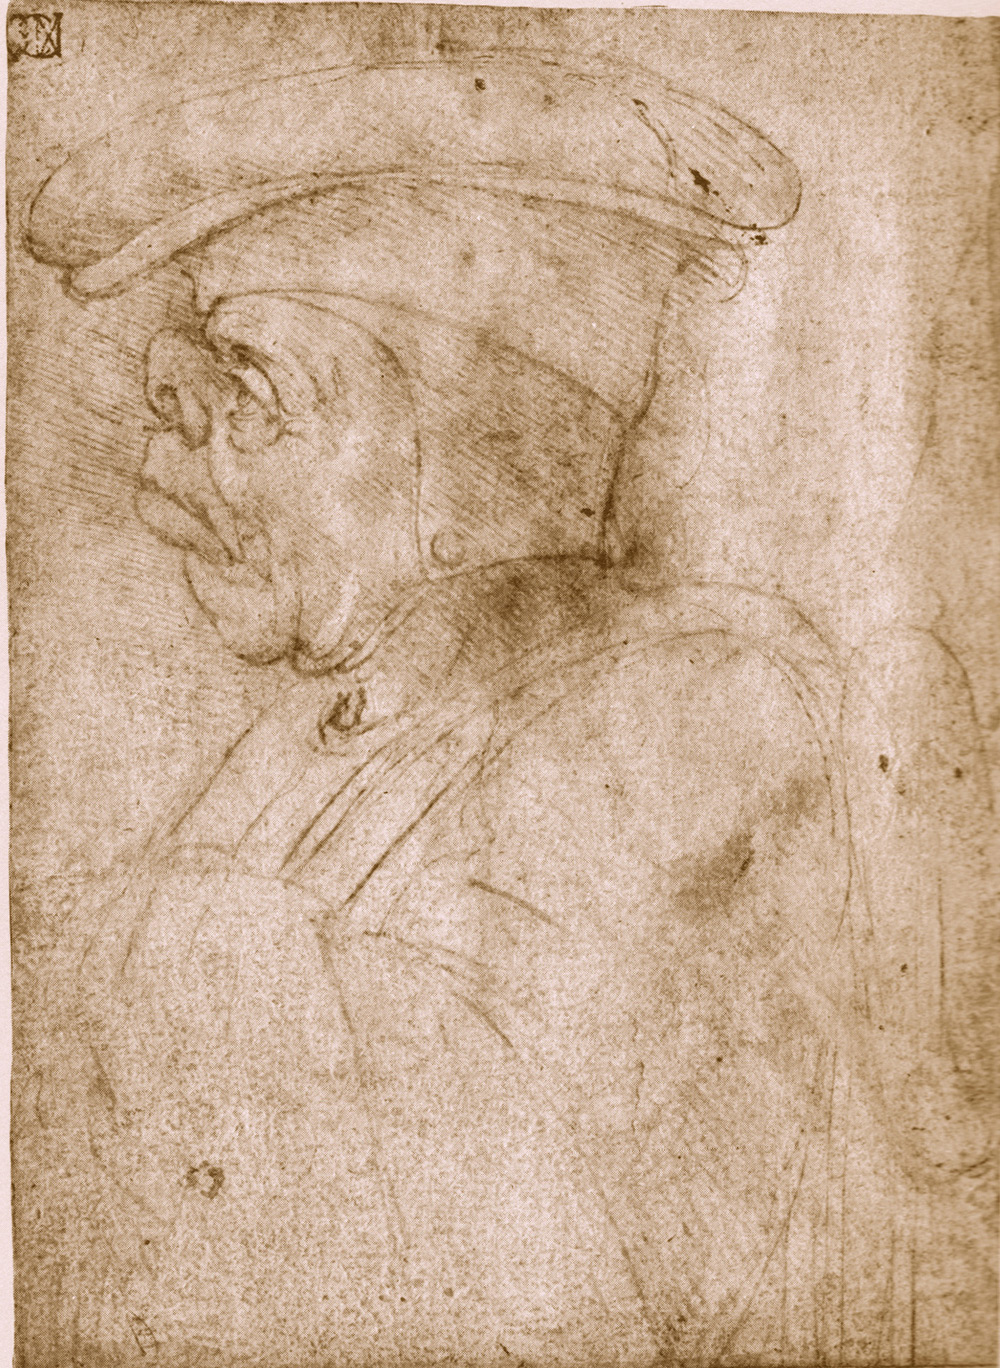 Leonardo da Vinci, Testa maschile grottesca (15 x 11 cm; Milano, Biblioteca Ambrosiana, F 274 inf. n. 53) 